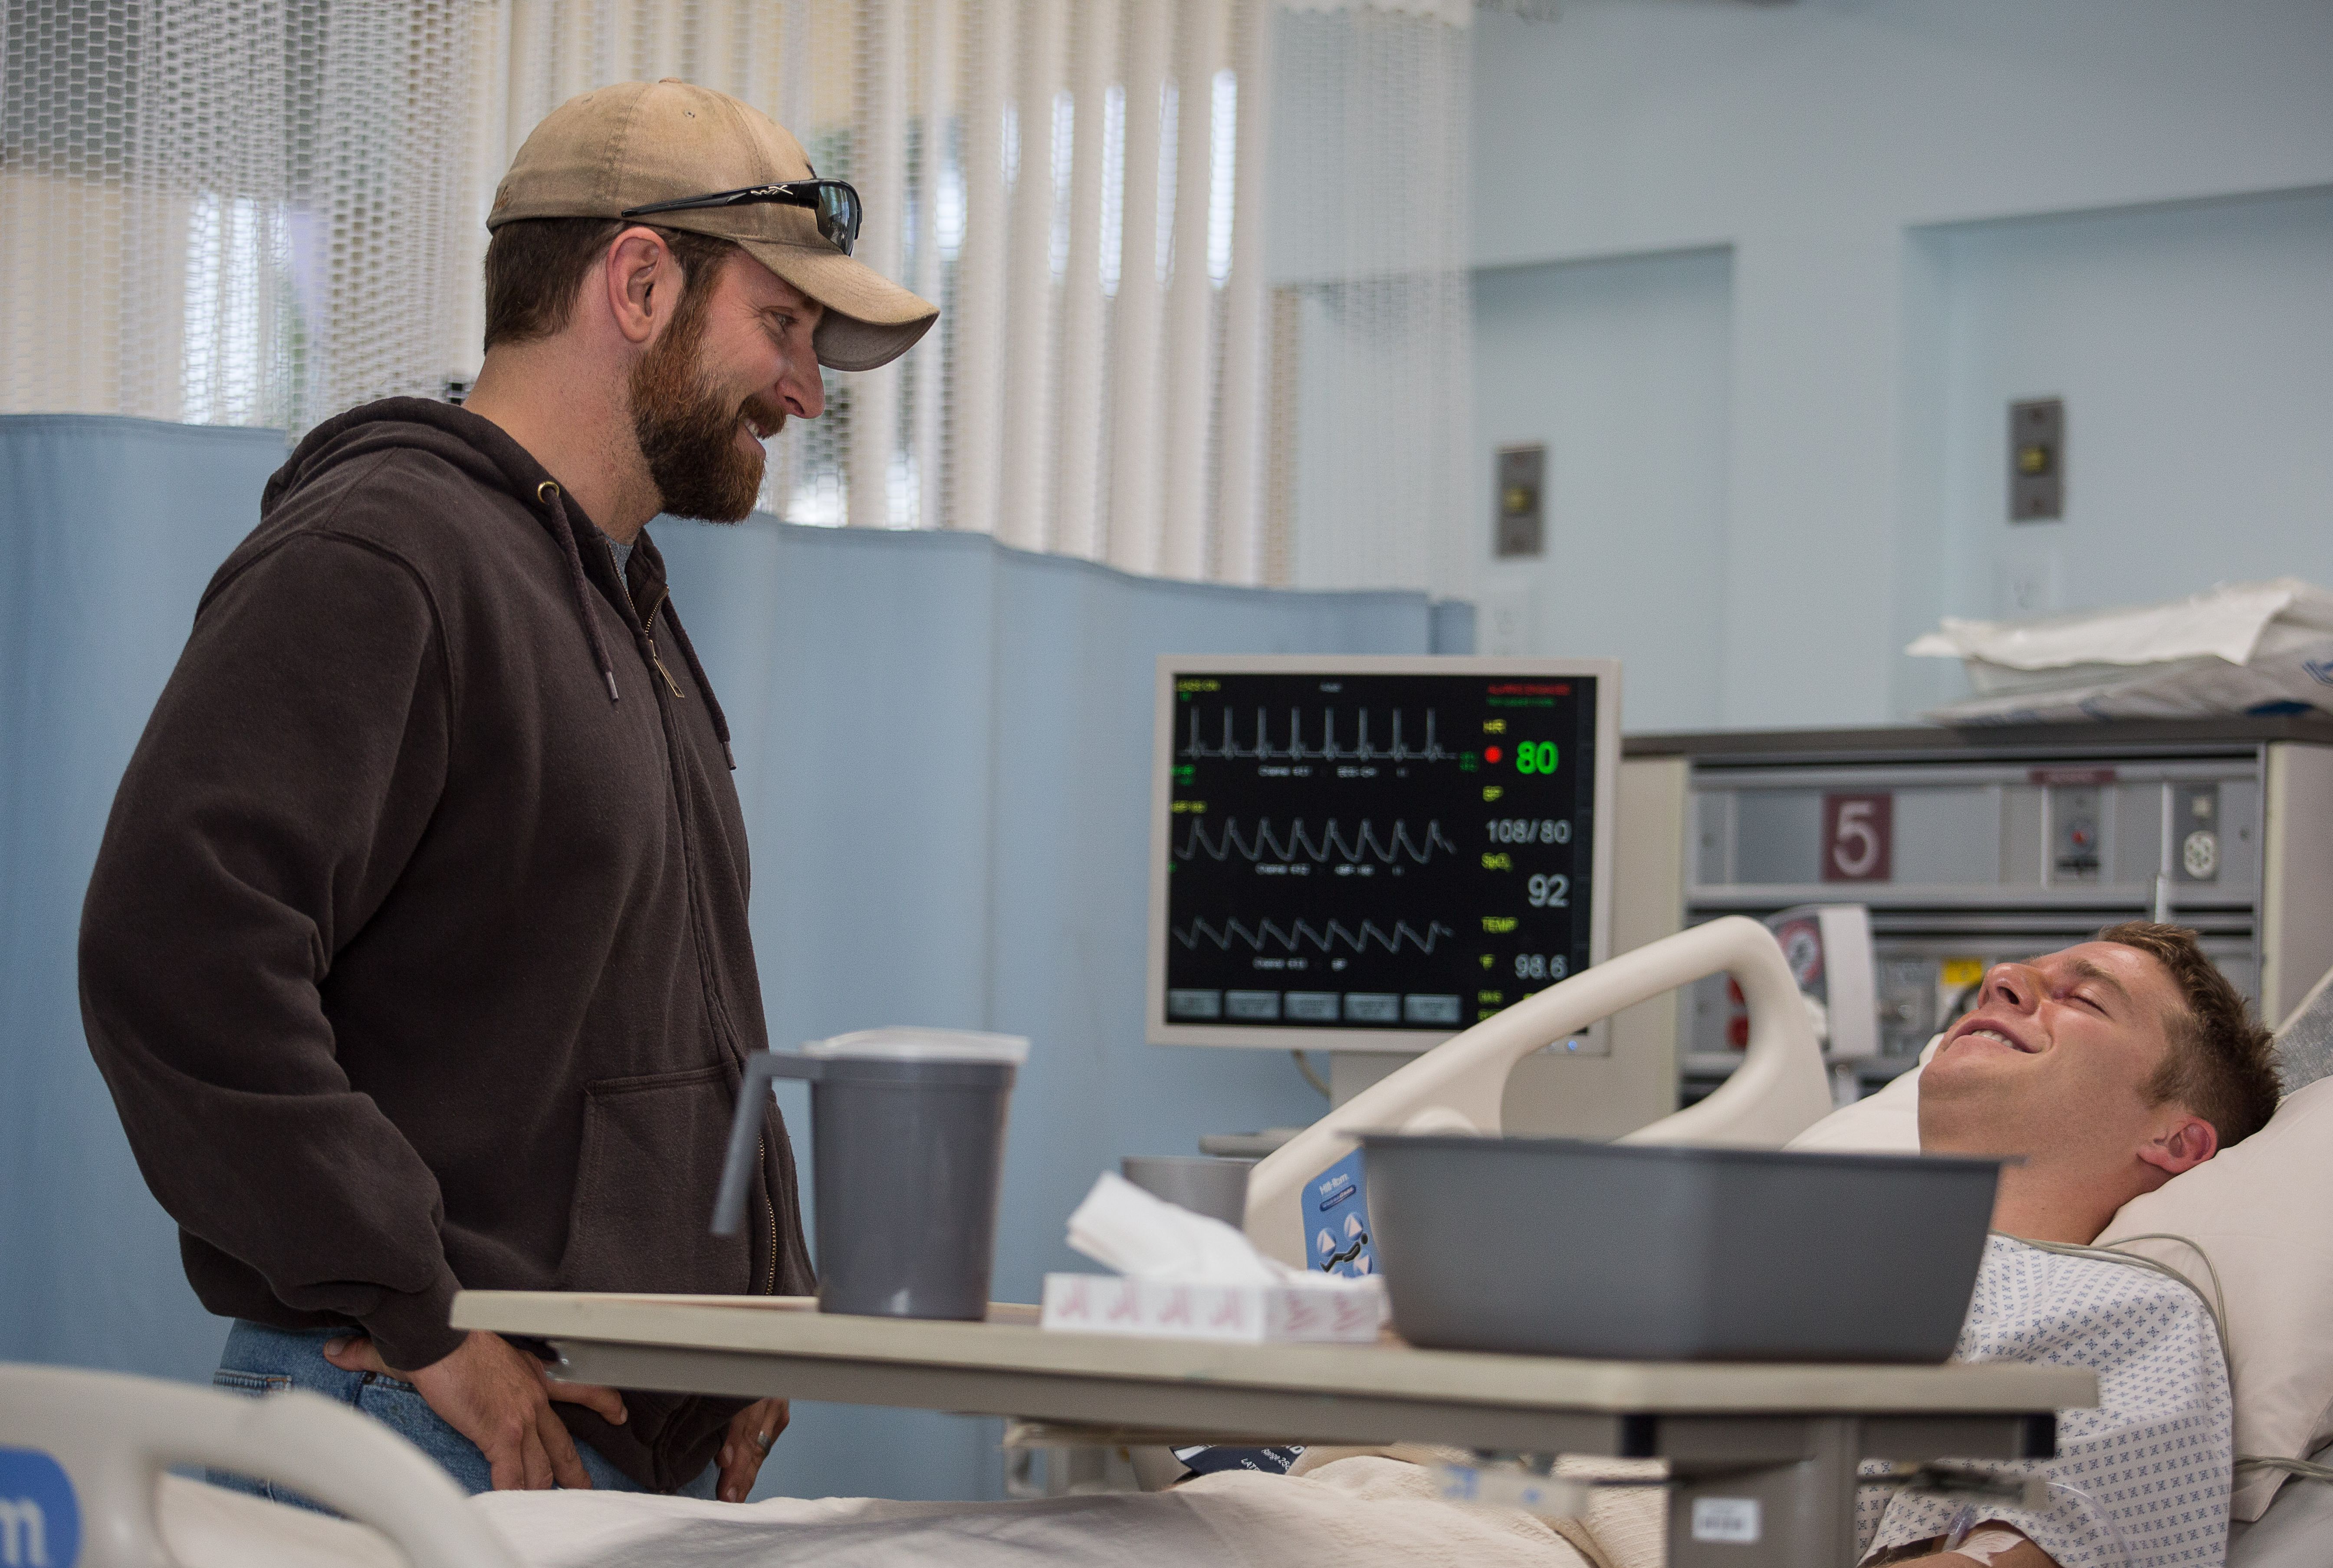 Bradley Cooper visits Jake McDorman in the hospital - Americ